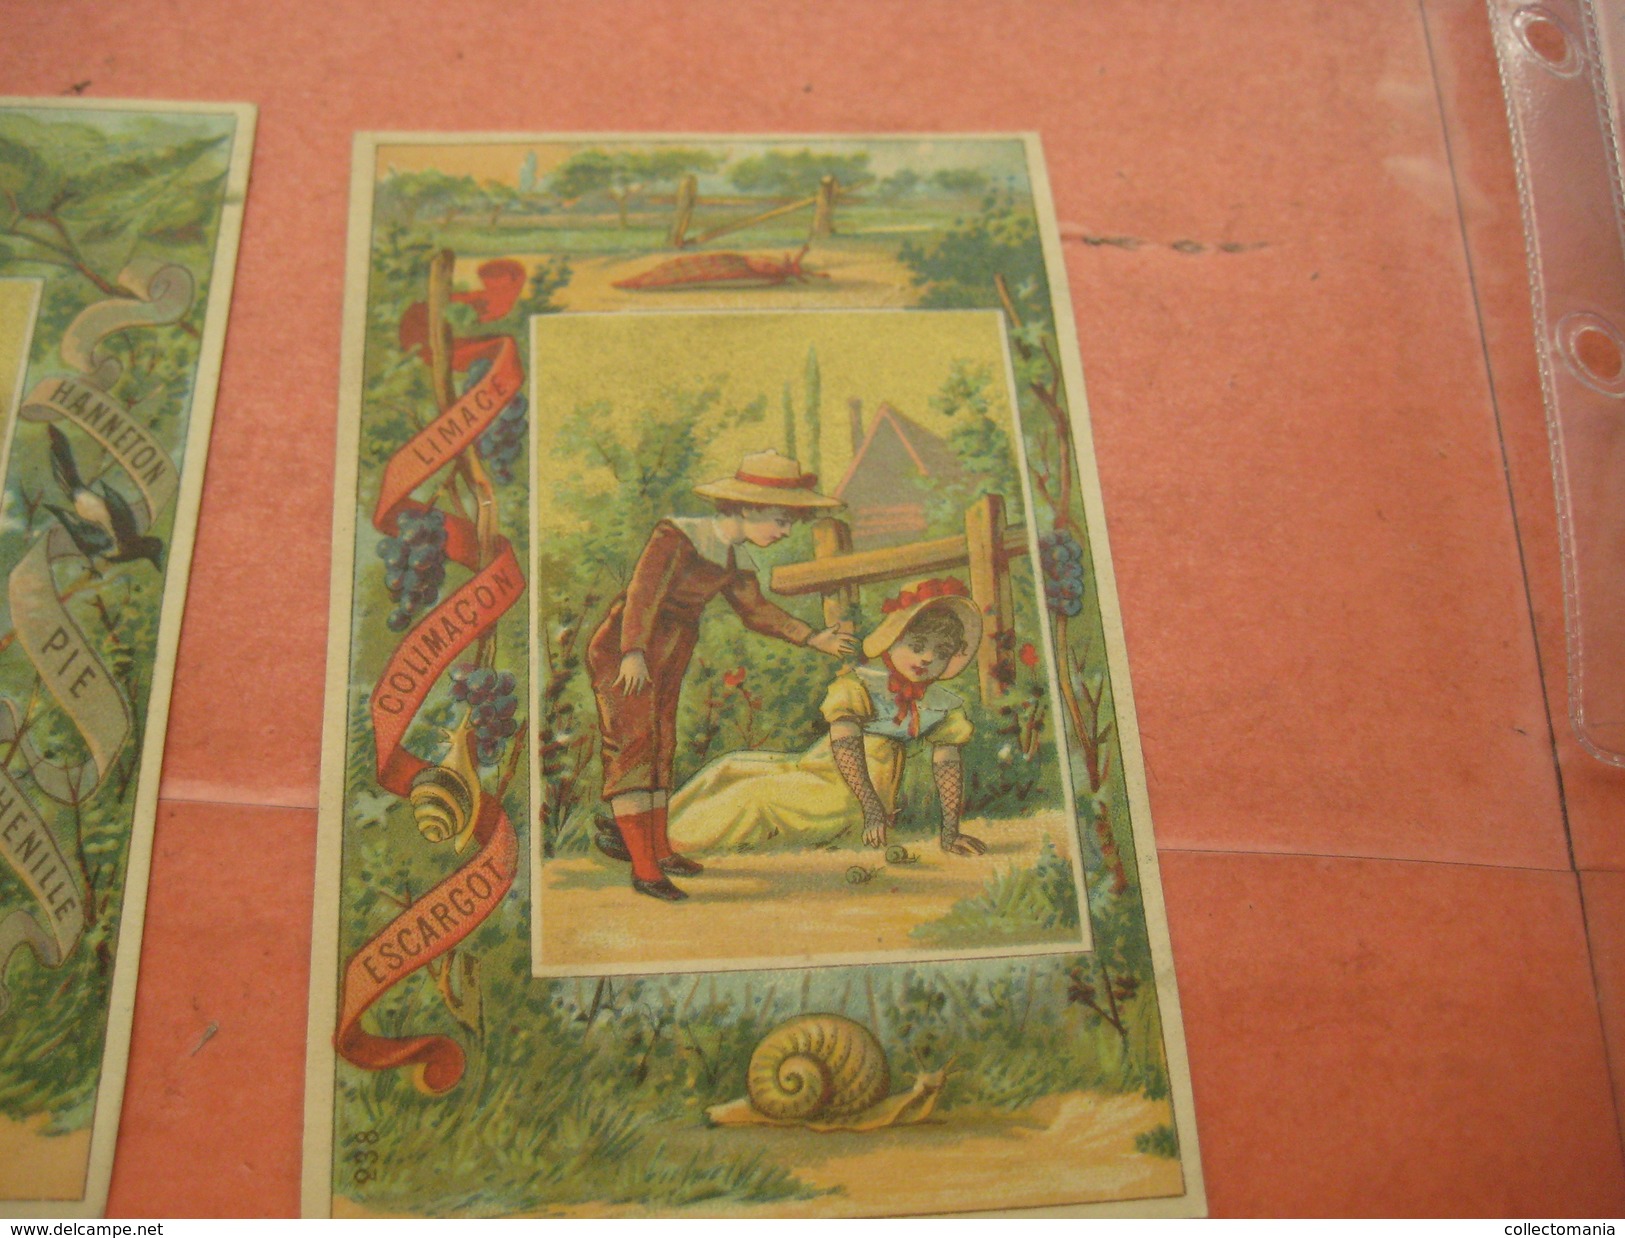 12 litho trade cards compl set237  CR 2-2-11 impr Courbe Rouzet PUB c1880 animals escargot viper Chocolat MAGNIEZ Amiens